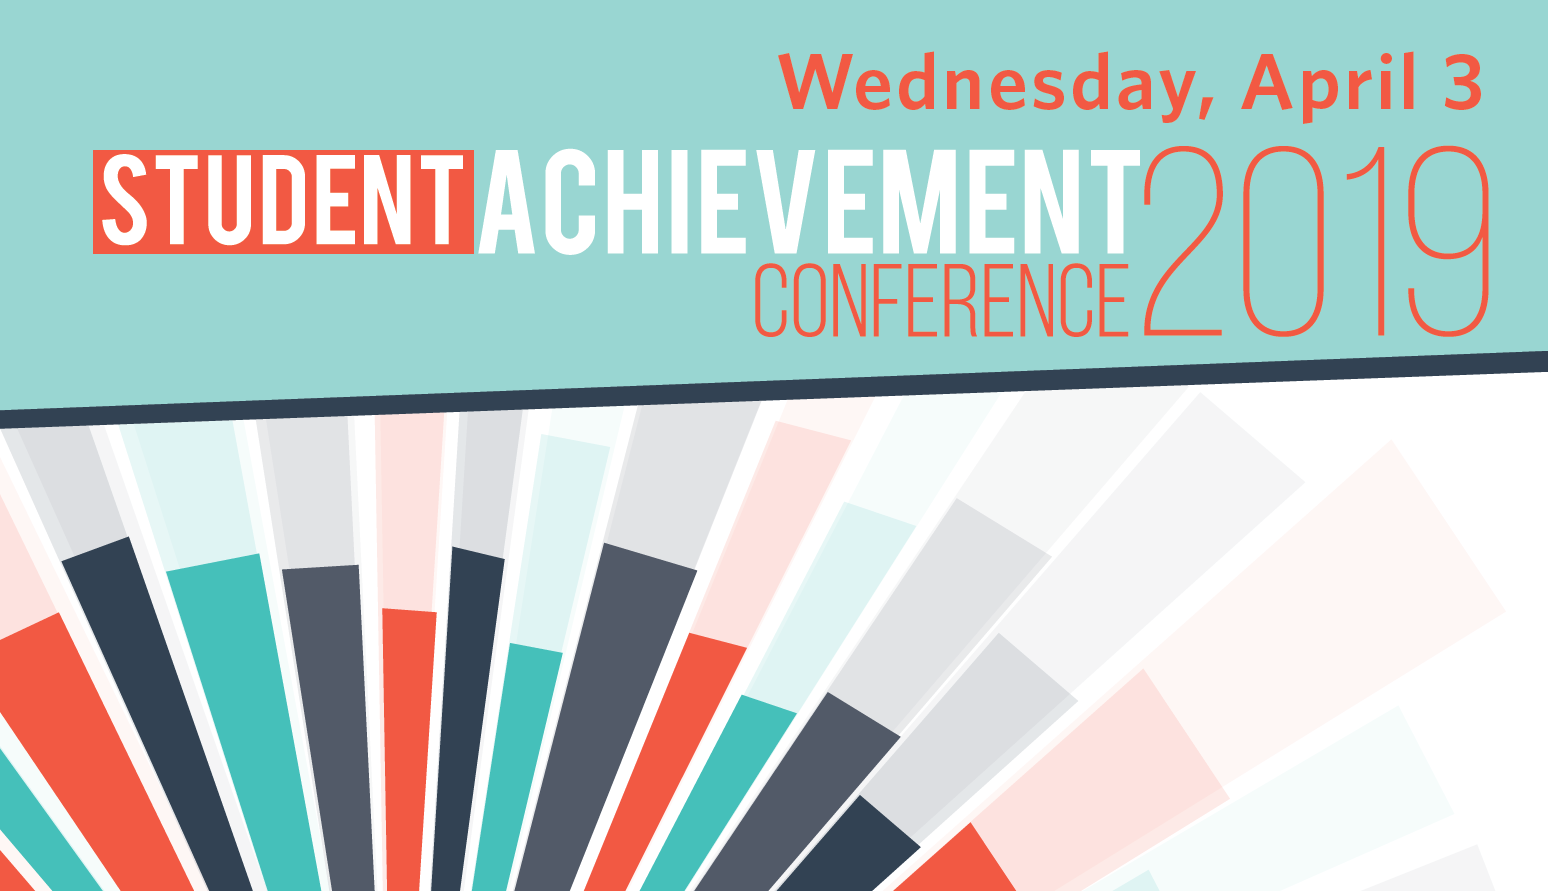 Student Achievement Conference 2019 logo